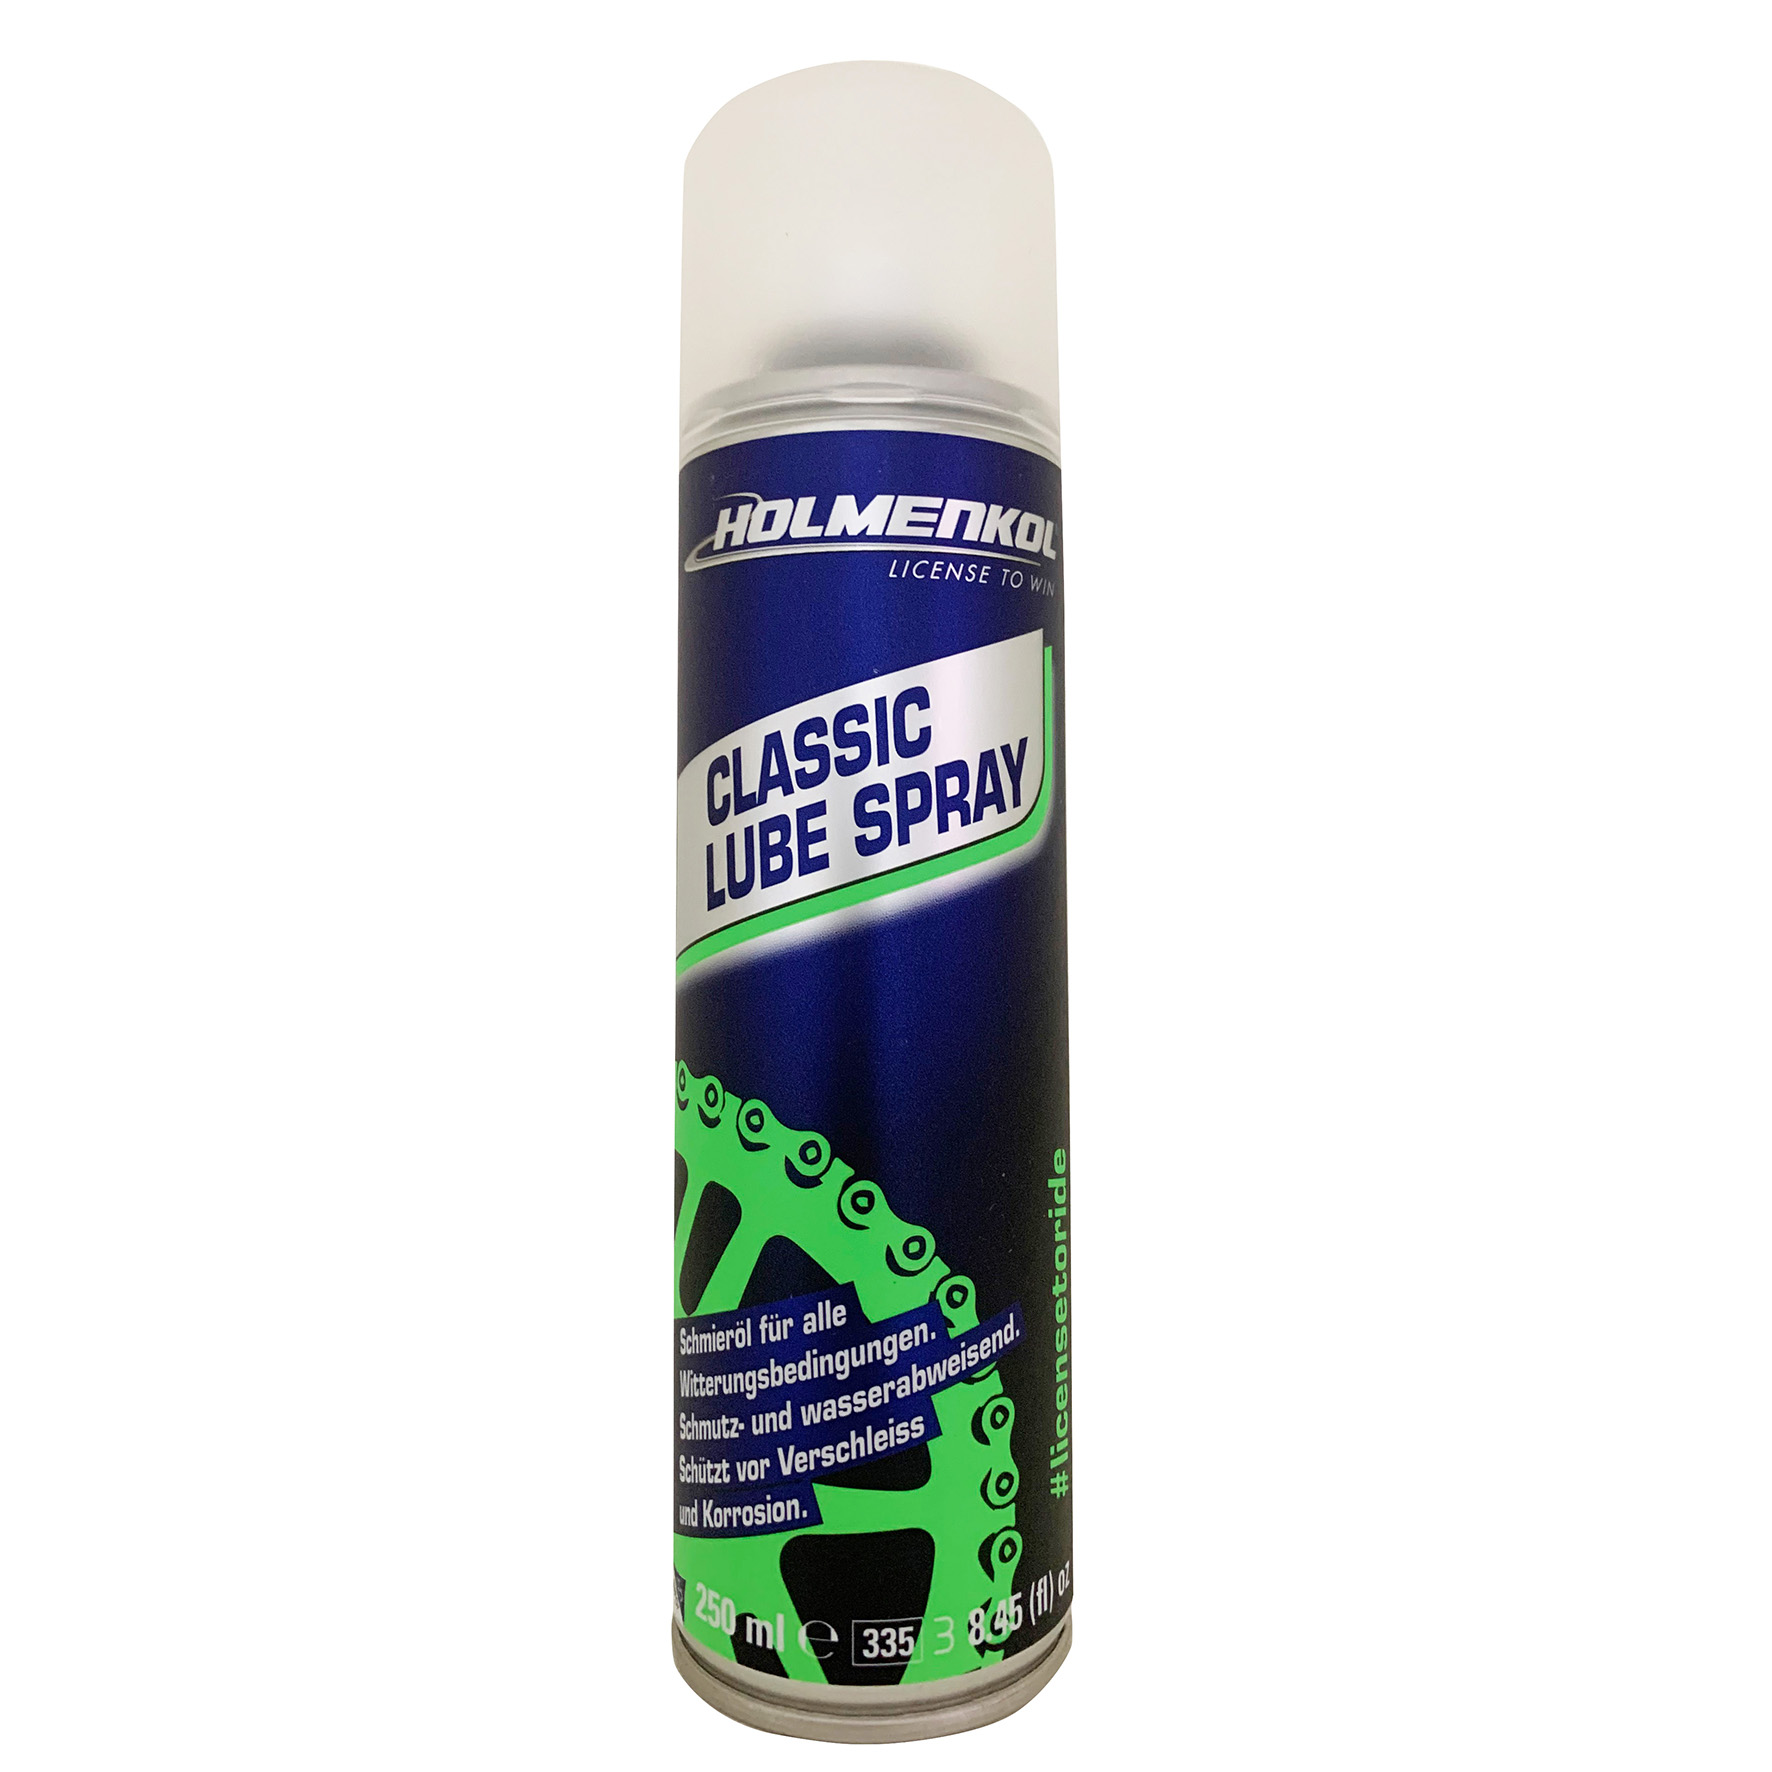 ClassicLube Spray - Schmieröl